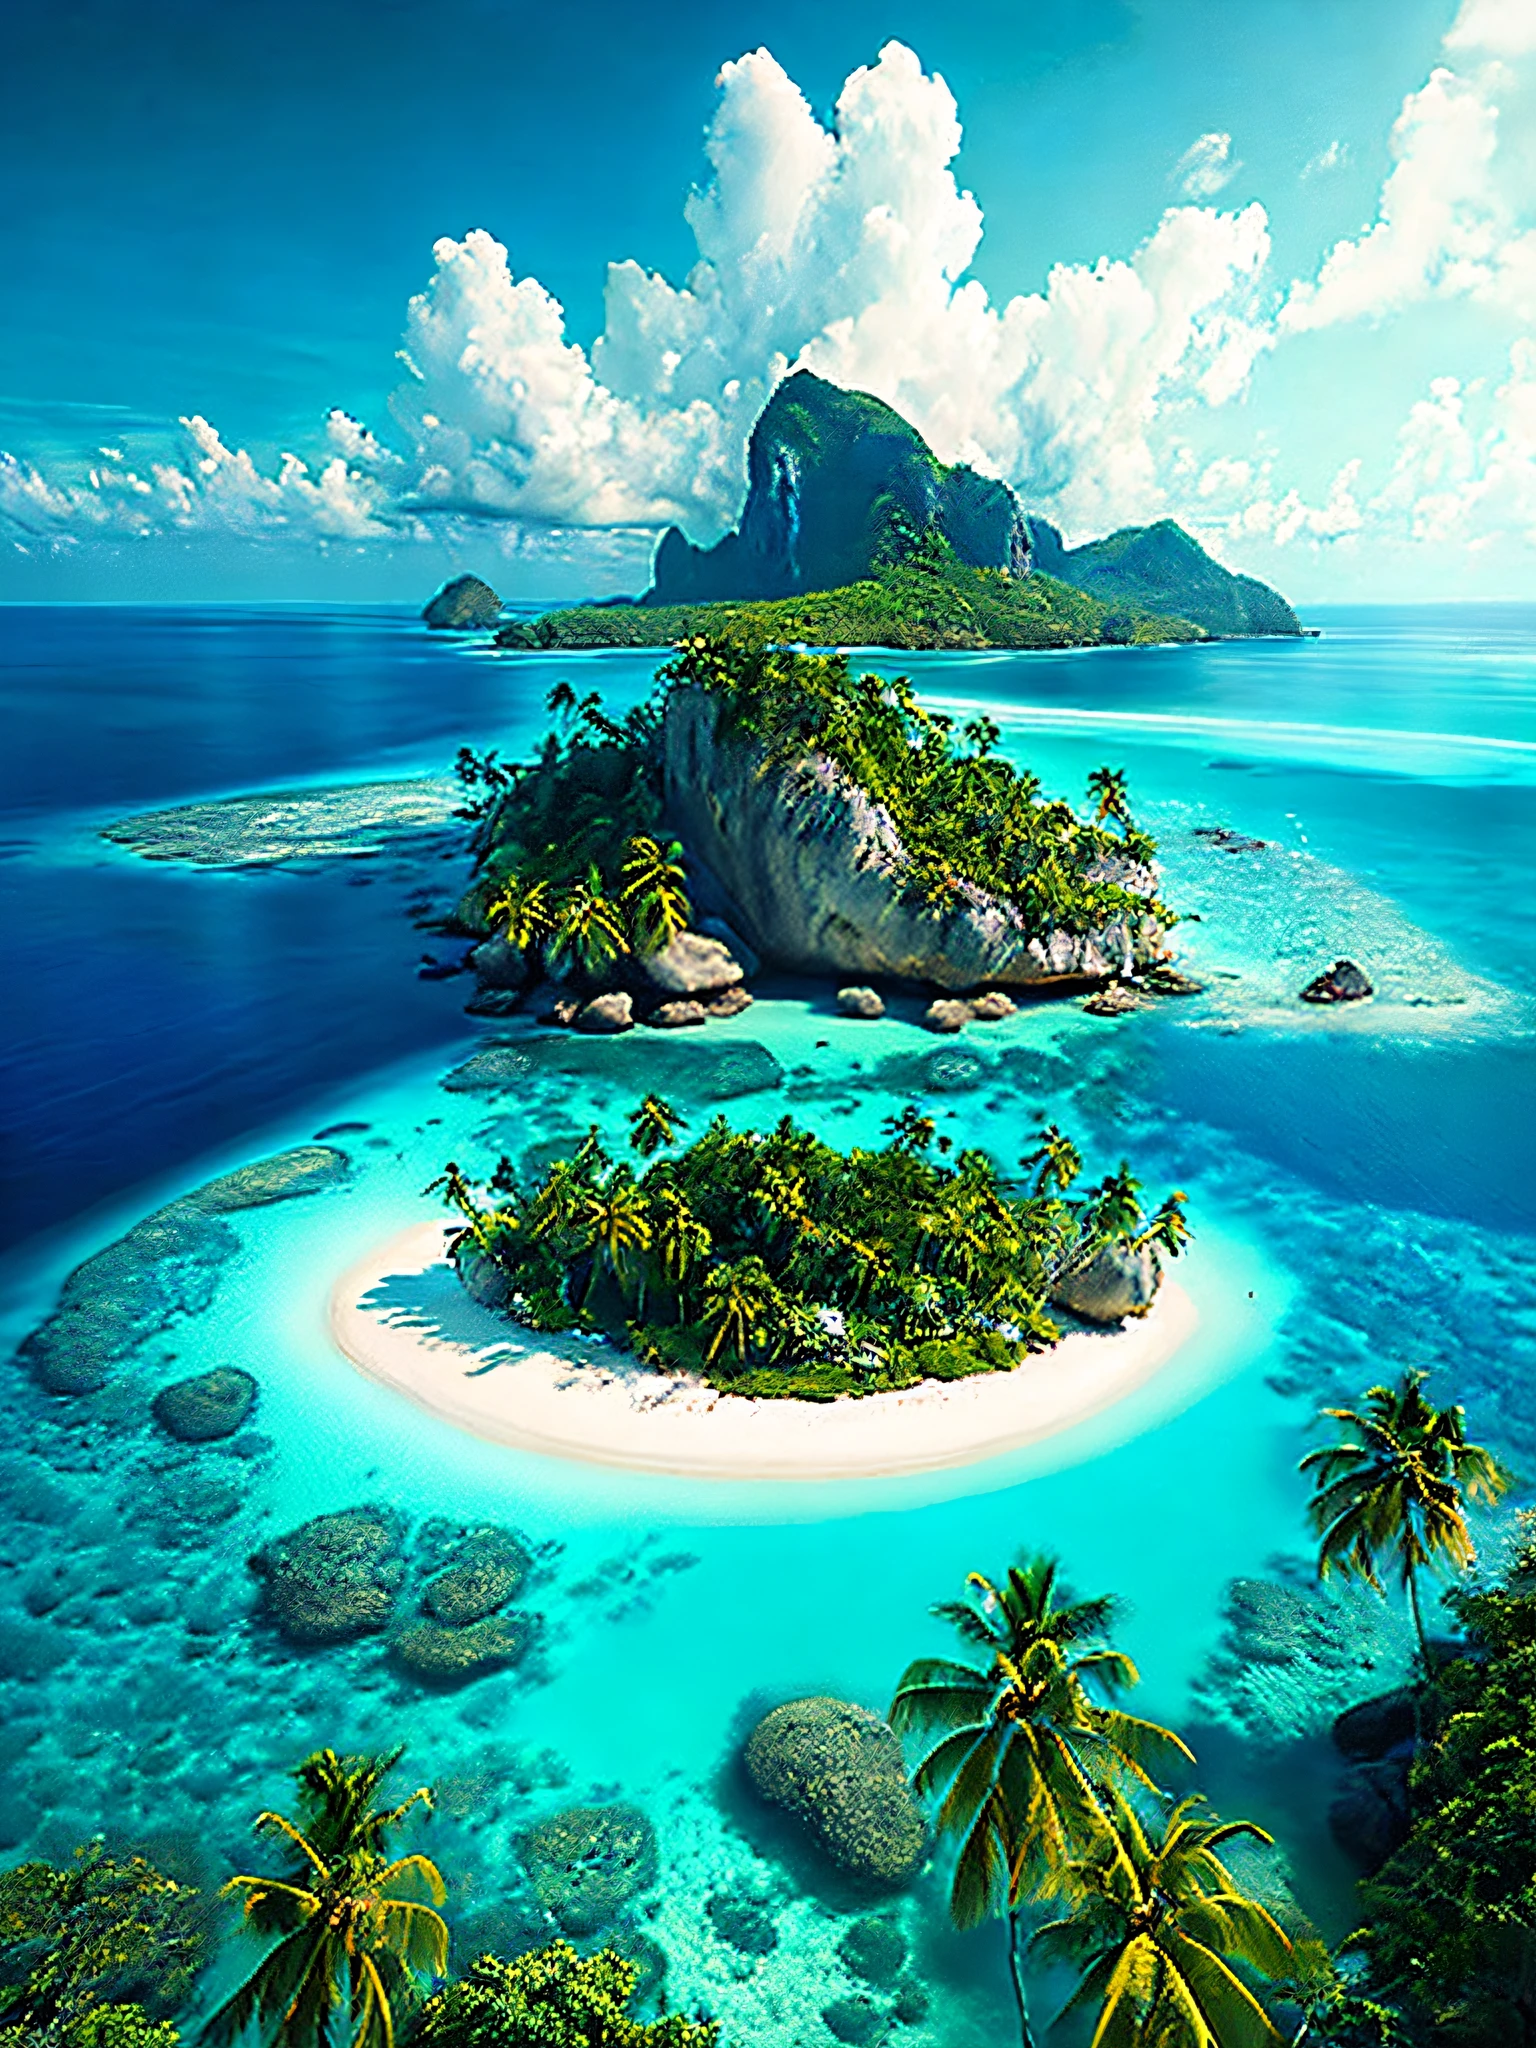 arafed เกาะ with palm ต้นไม้s and a ทรายy ชายหาด, tropical เกาะ, epic matte painting of an เกาะ, เกาะ in a blue sea, an เกาะ floating in the air, an เกาะ, เกาะ landscape, เกาะ floating in the ท้องฟ้า, เกาะ background, monsoon on tropical เกาะ, เกาะ in the background, floating เกาะ, ที่ตั้งเขตร้อน, เกาะ, เกาะ with cave, many เกาะs, ไม่มีมนุษย์, ต้นไม้, คลาวด์, ท้องฟ้า, กลางแจ้ง, ทิวทัศน์, วัน, palm ต้นไม้, มหาสมุทร, น้ำ, ชายหาด, blue ท้องฟ้า, ขอบฟ้า, คลาวด์y ท้องฟ้า, ธรรมชาติ, ทราย